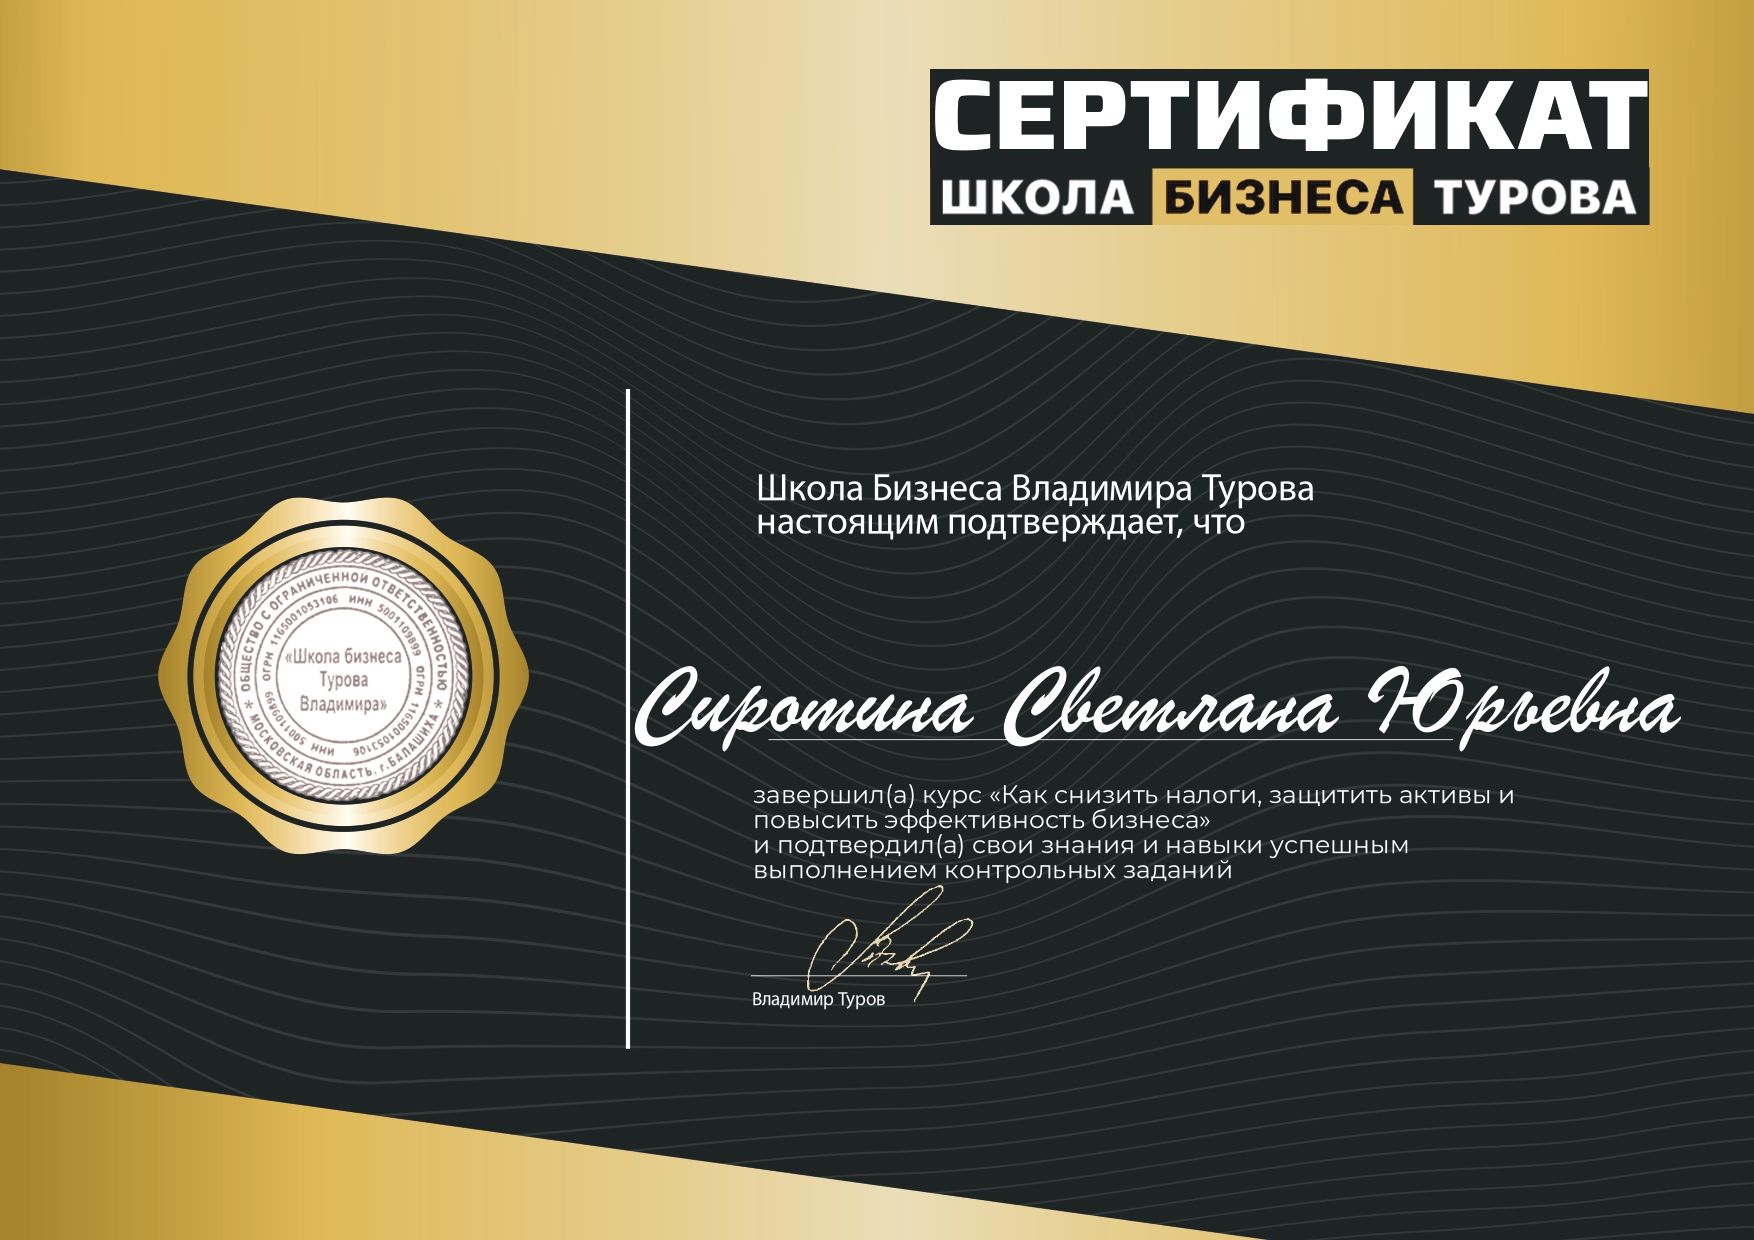 Сертификат Сиротина С.Ю. - Оптимизация налогообложения